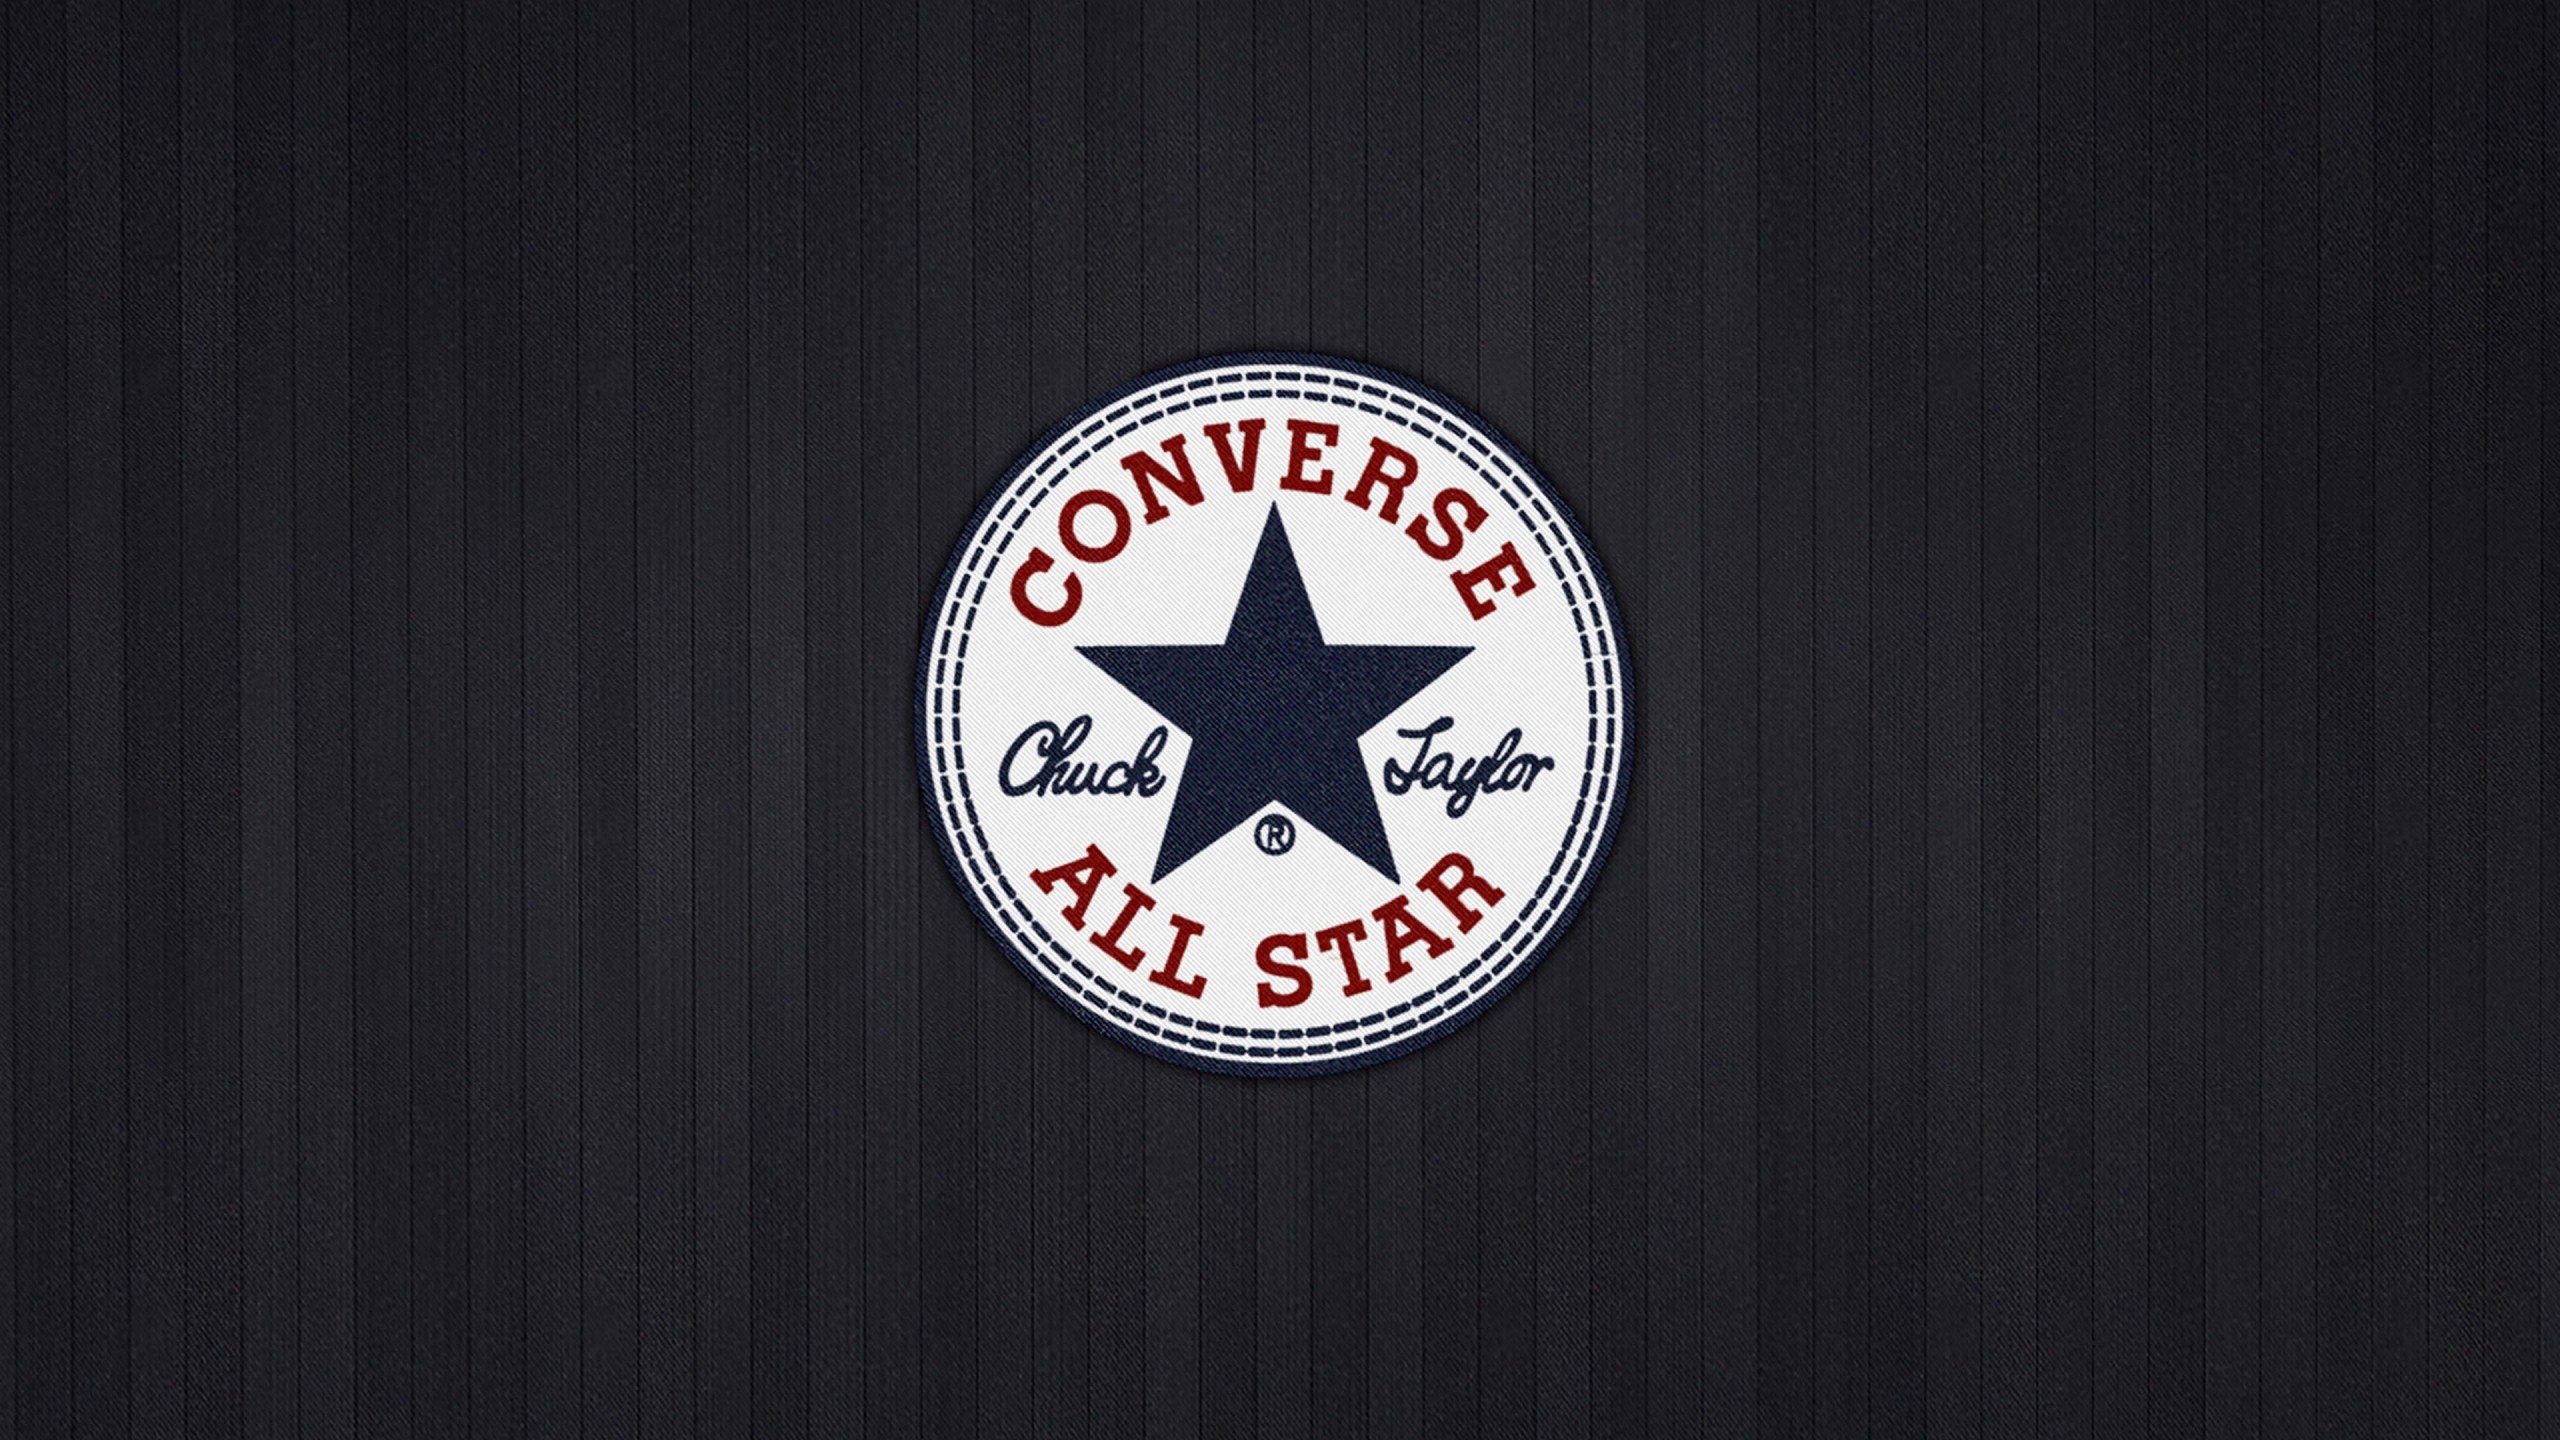 Converse All Star Wallpaper for Social Media YouTube Channel Art